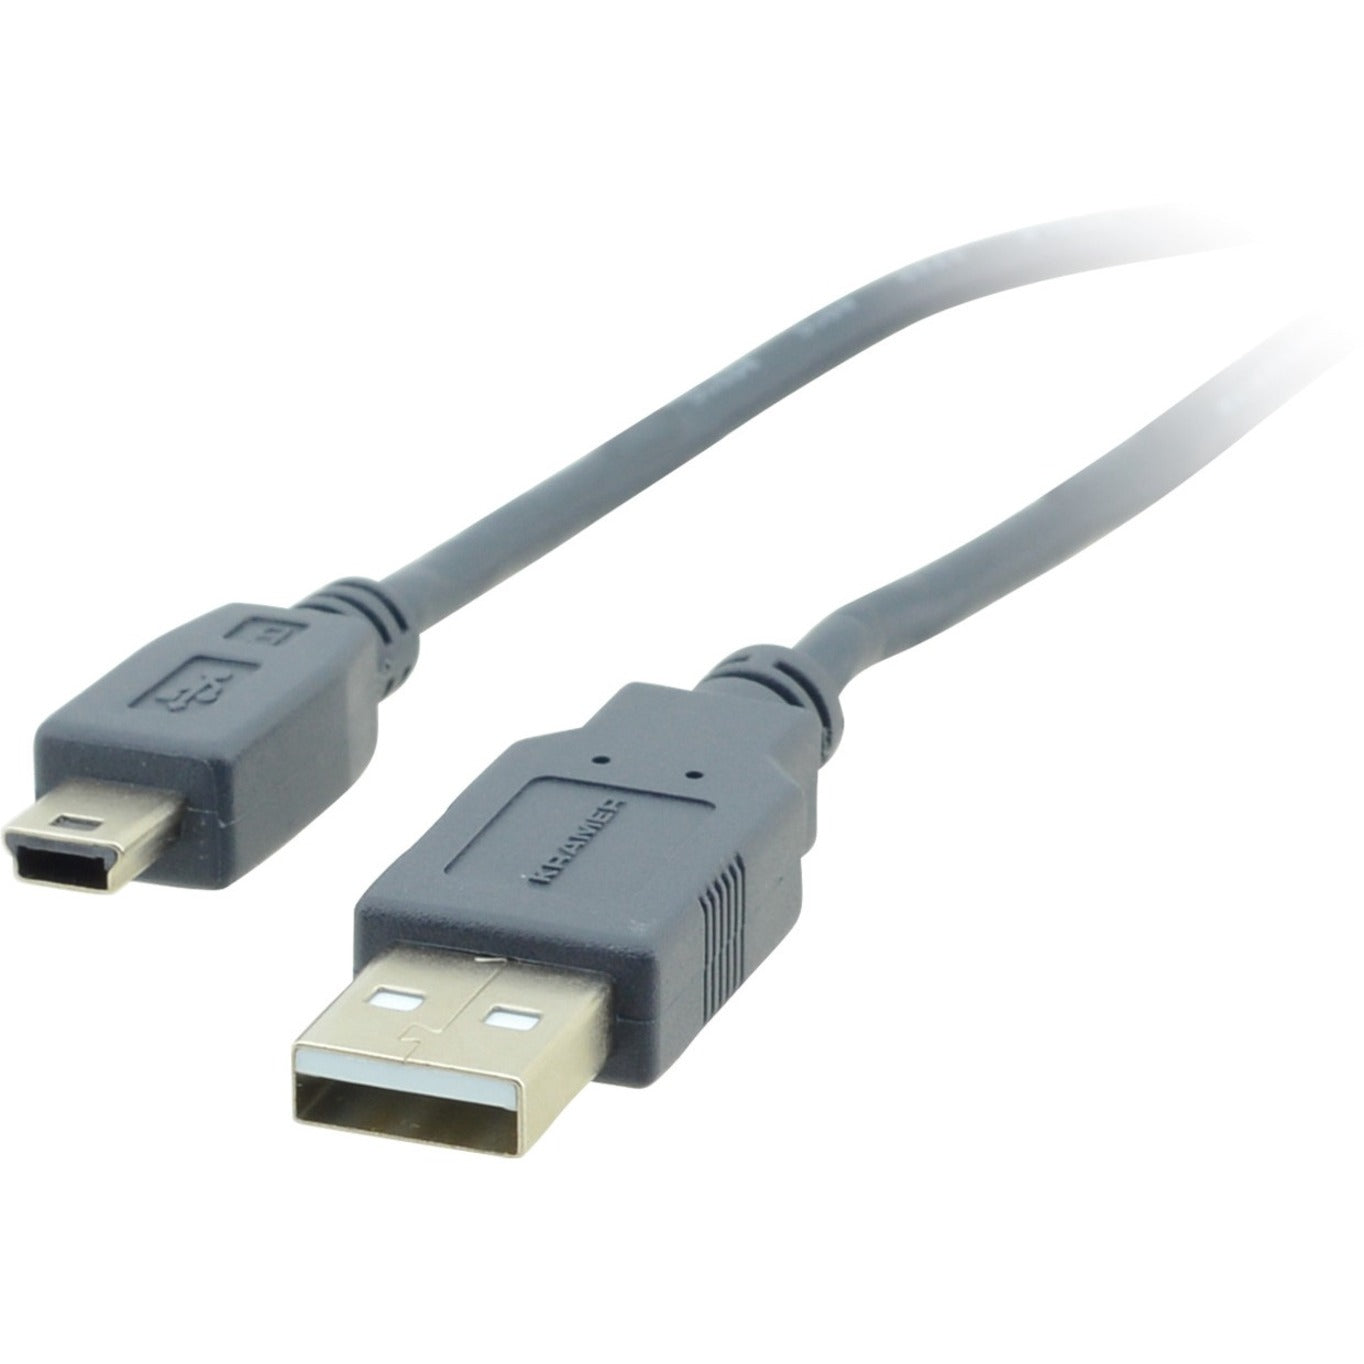 Kramer 96-02155006 USB 2.0 A to Mini-B 4-pin Cable, 6 ft, EMI/RF Protection, Gray